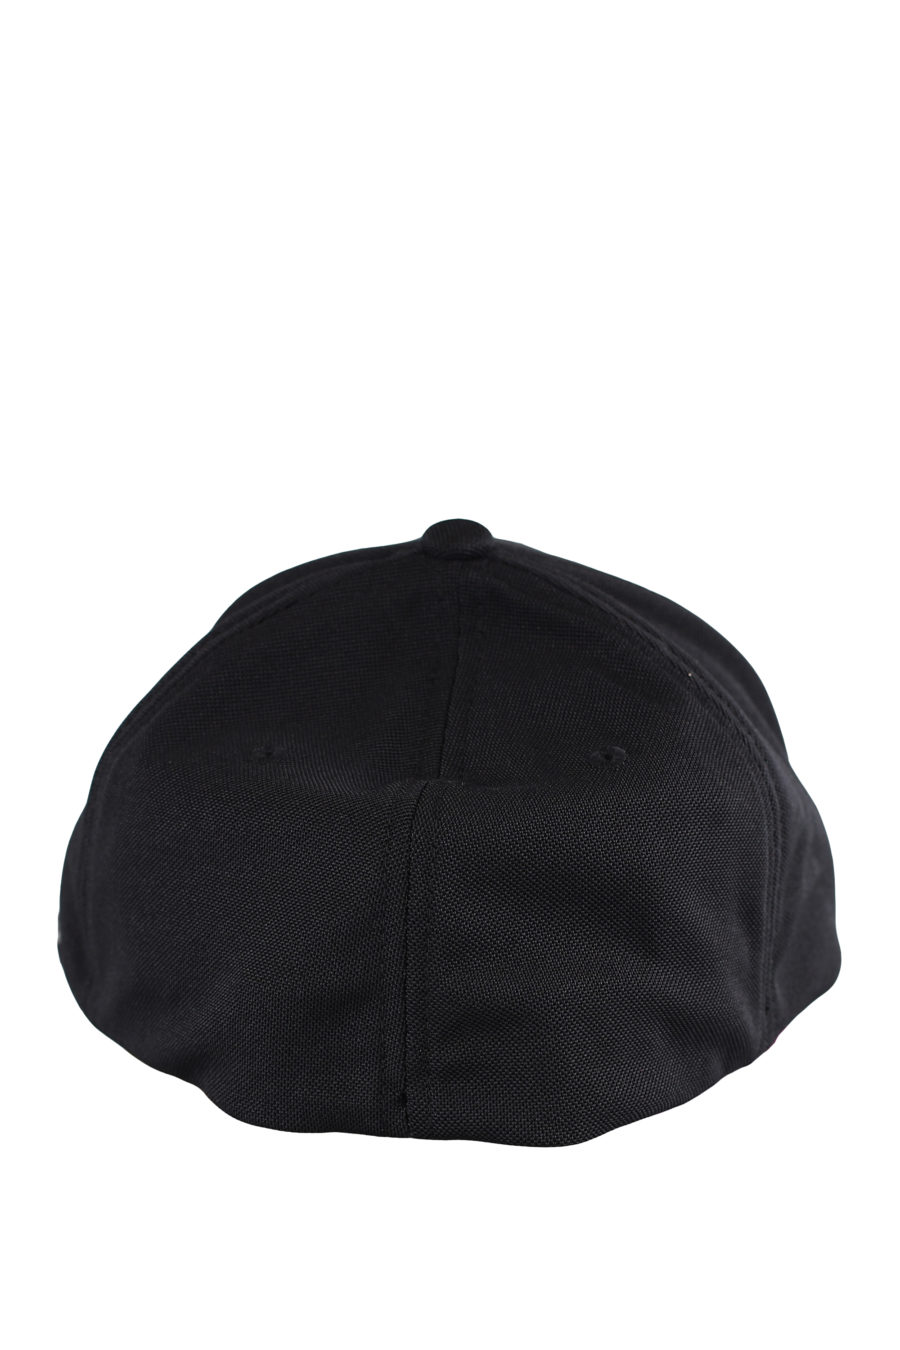 Black cap with white rubberised "Karl" - IMG 9605